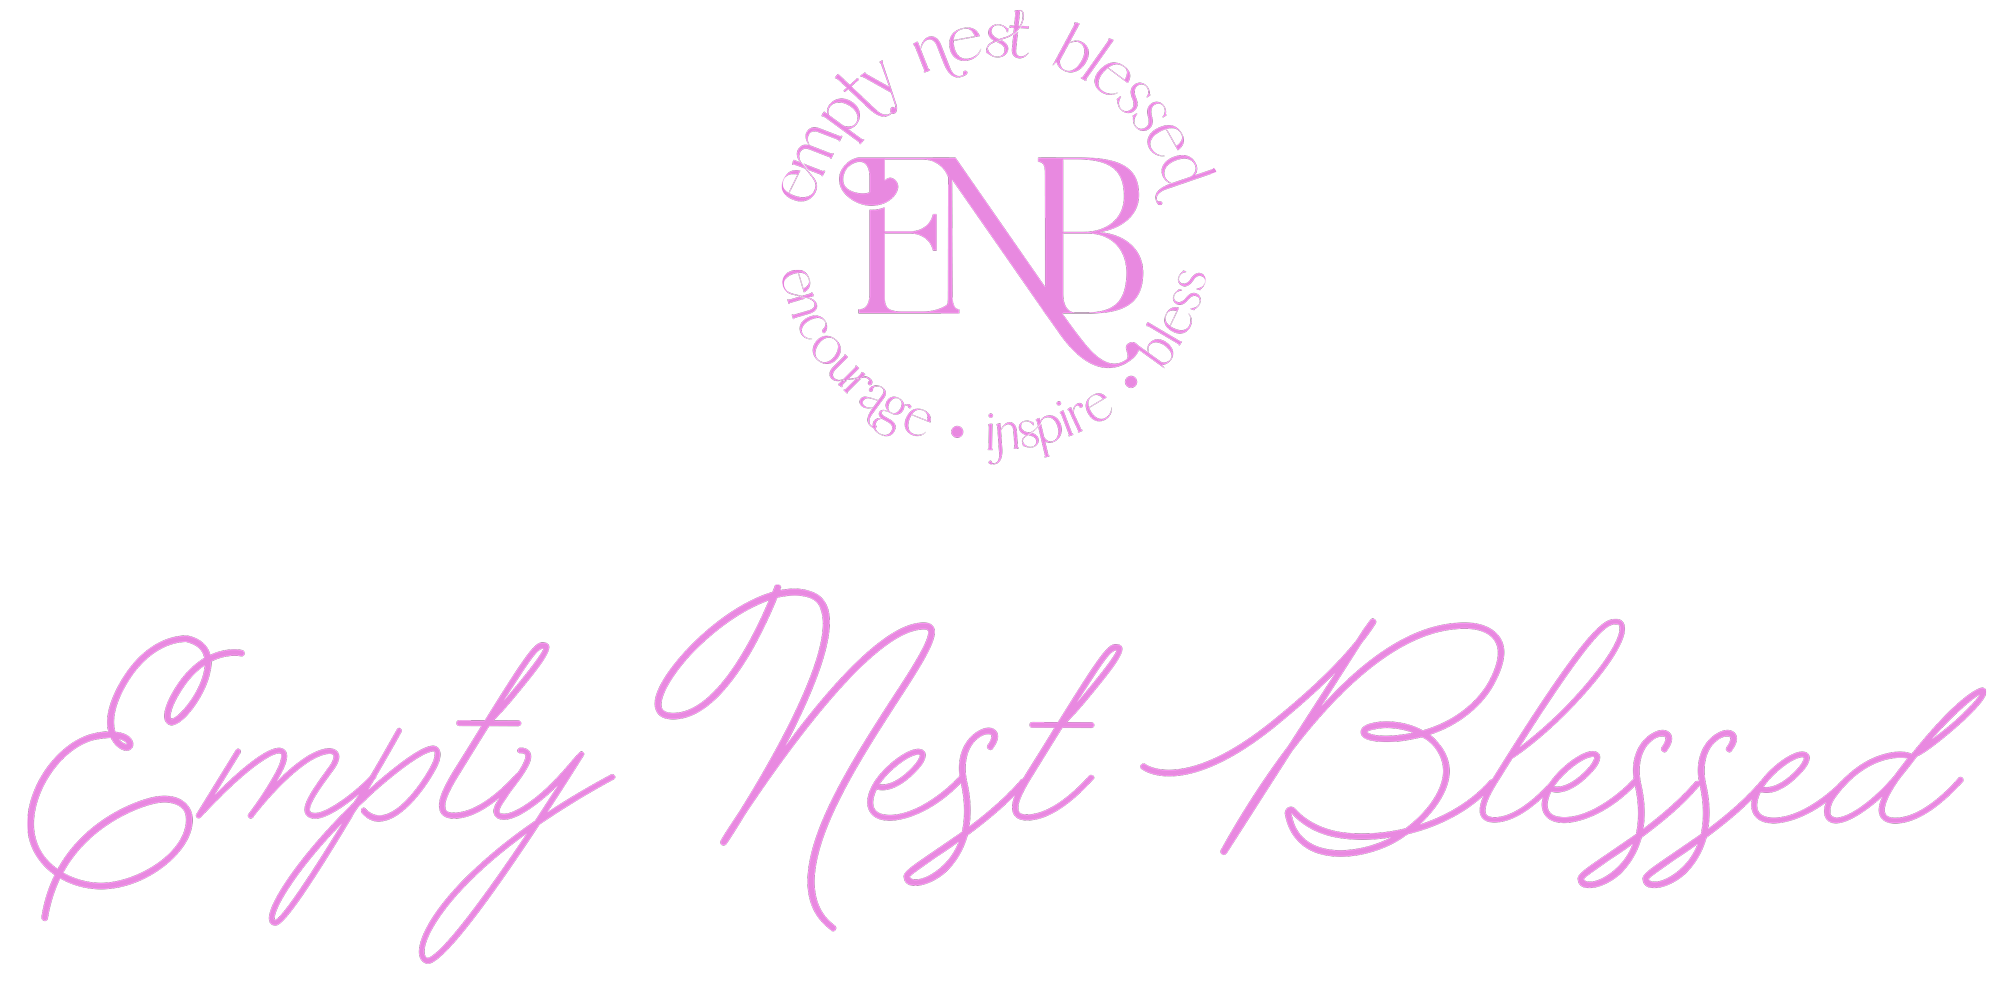 Empty Nest Blessed